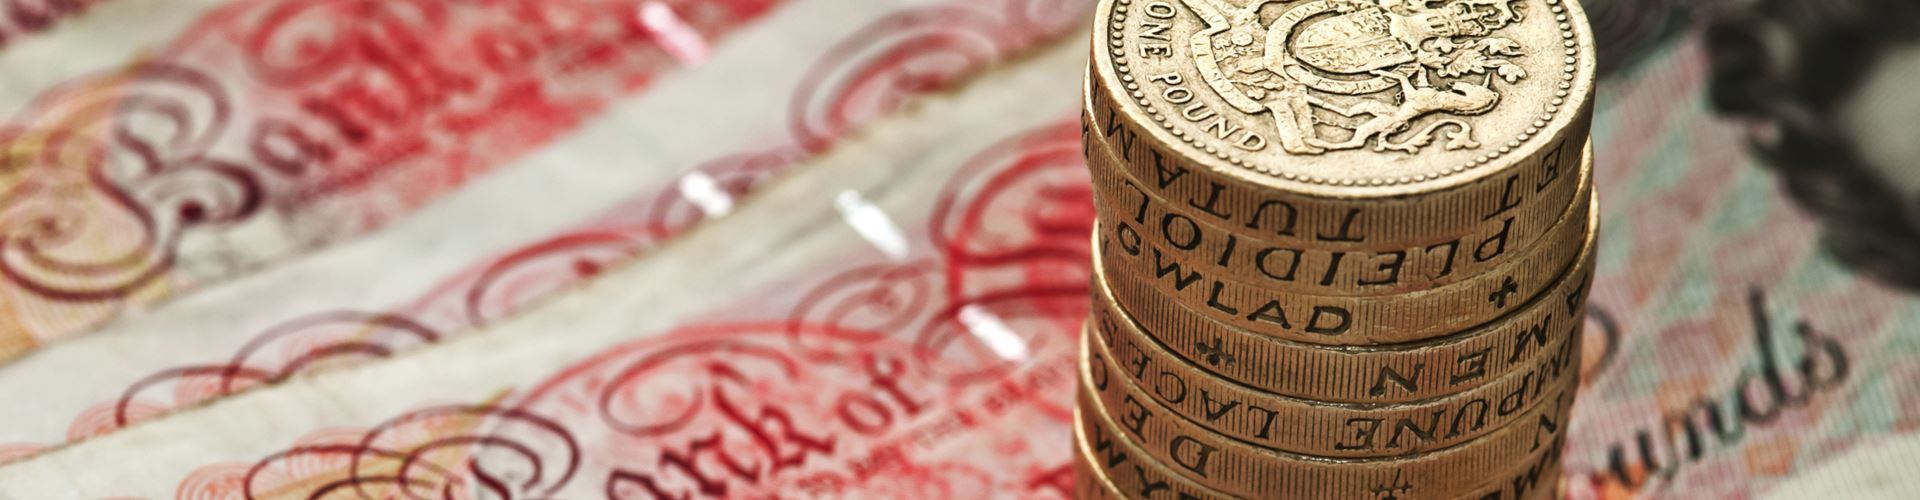 Asset-based lending for UK businesses reaches record high